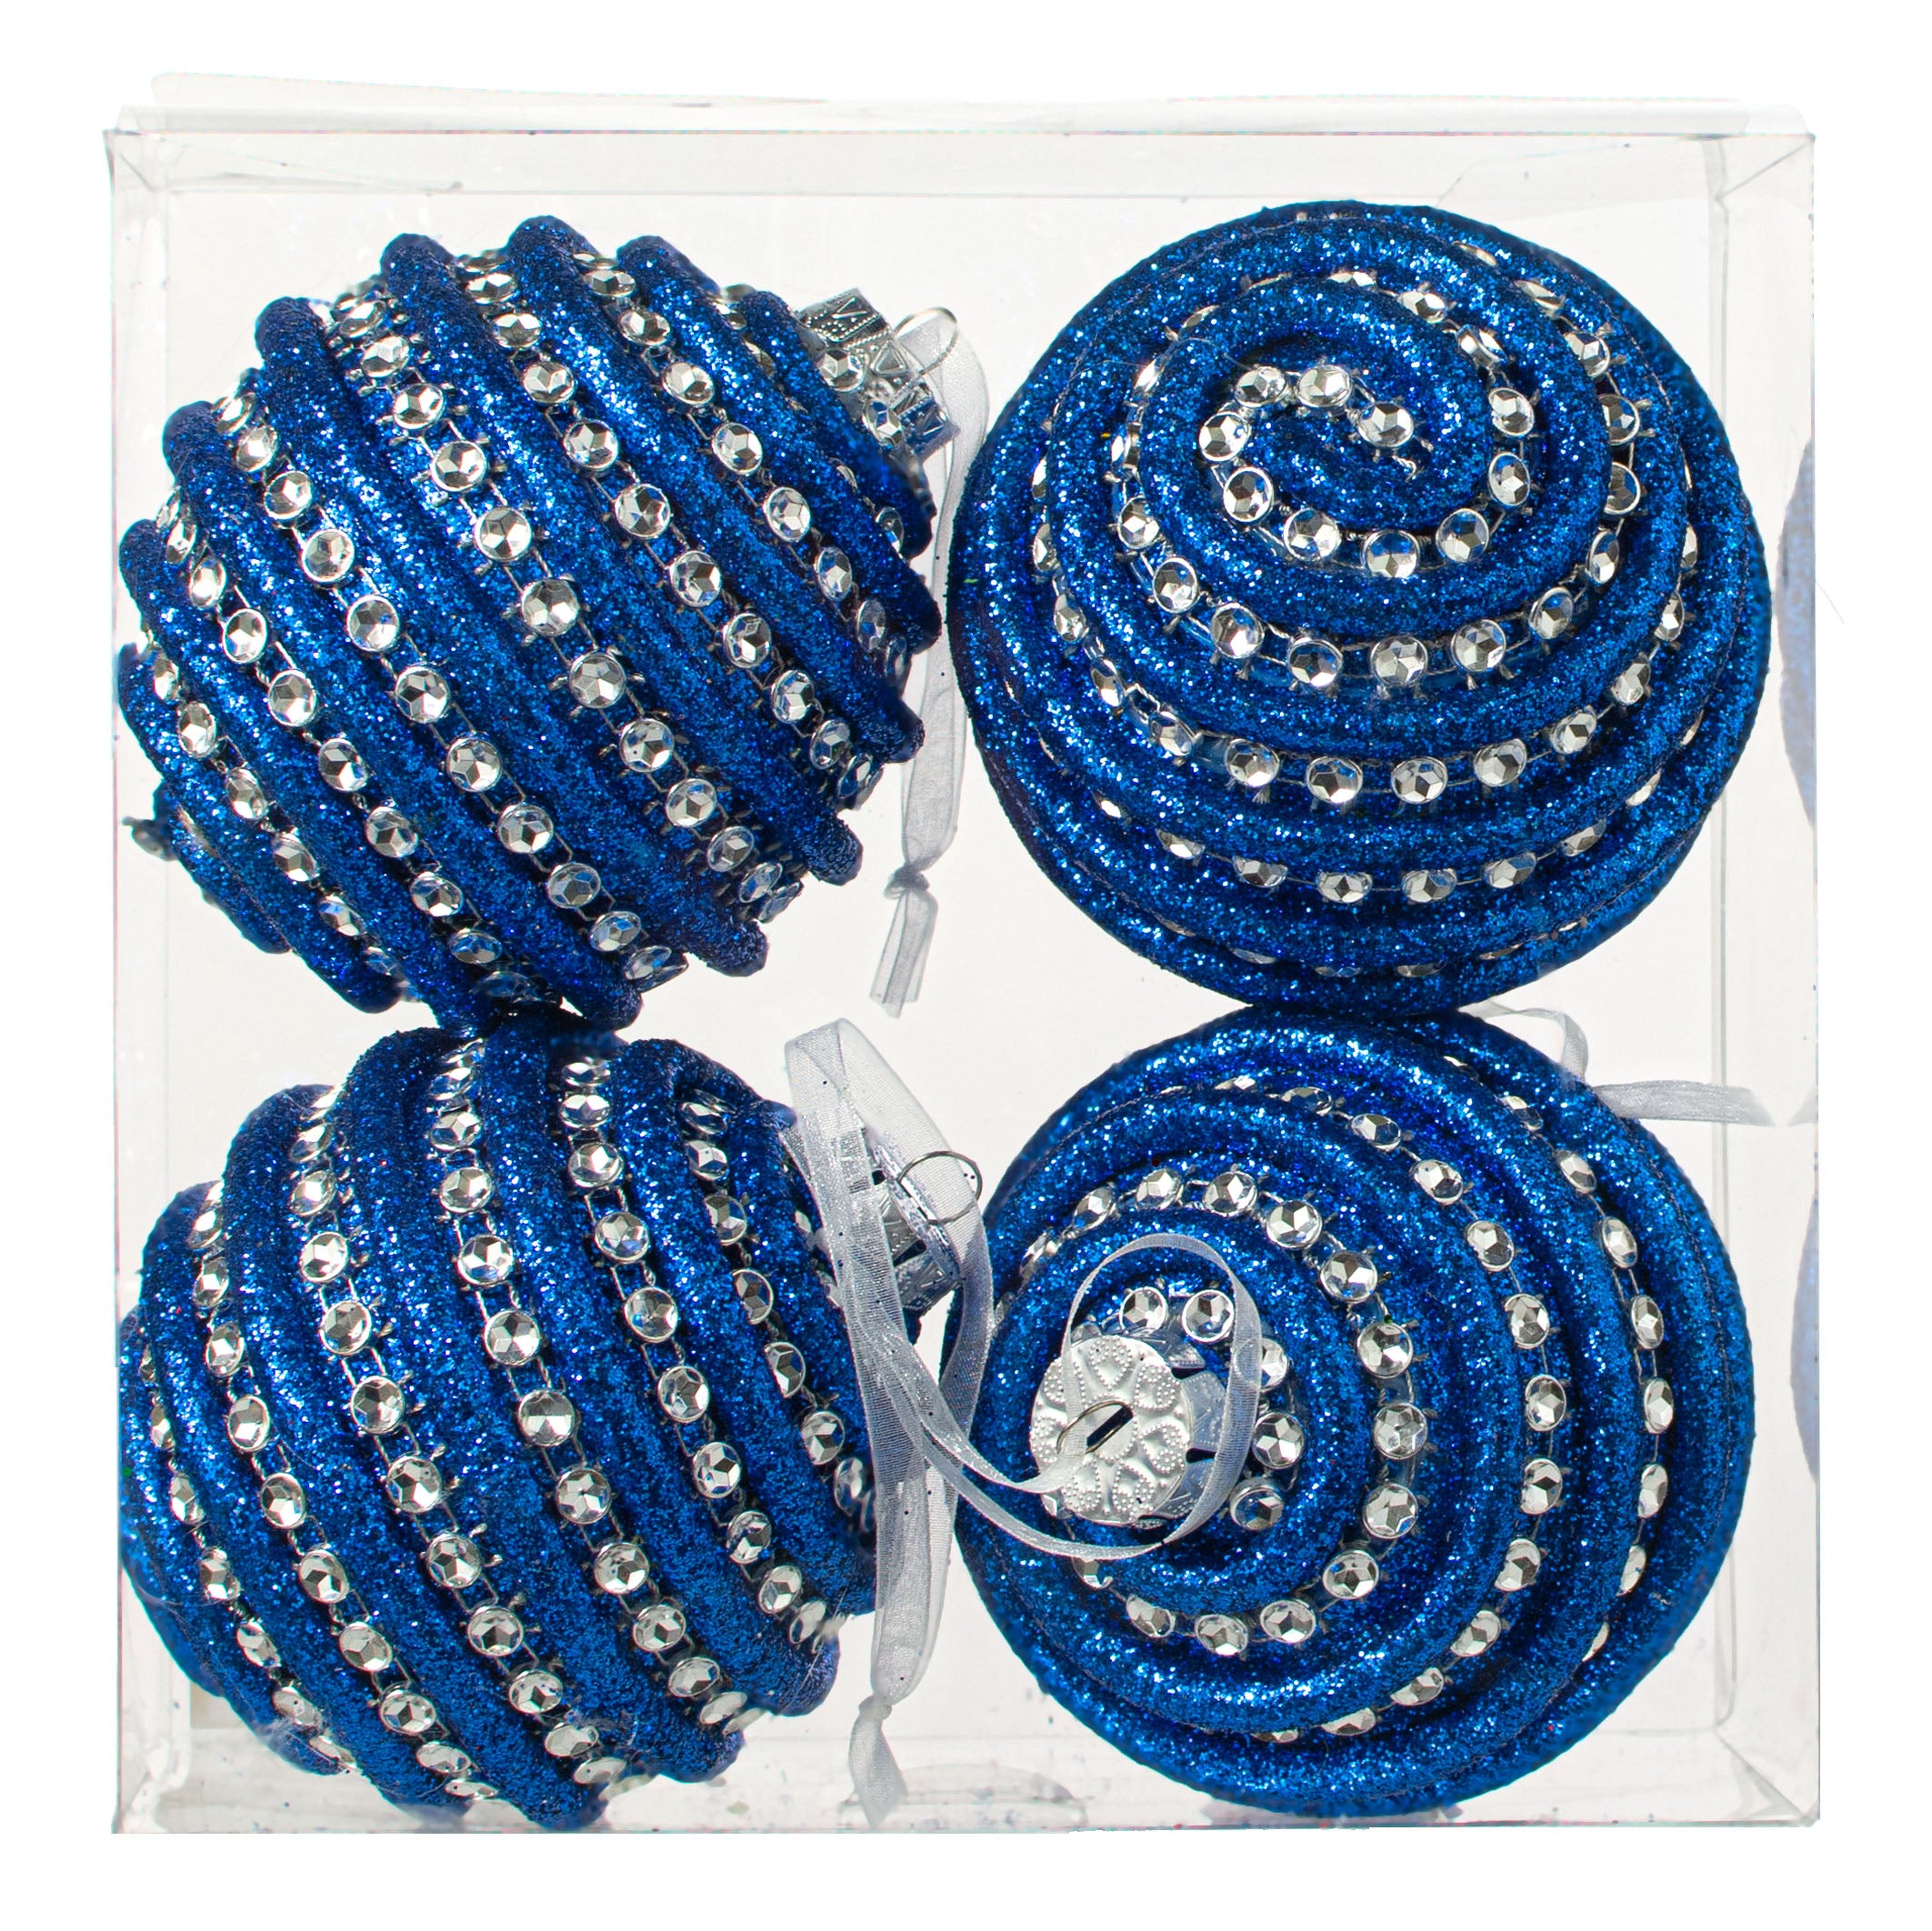 4" Jewel Ball Ornament: Blue & Silver (Box of 4)